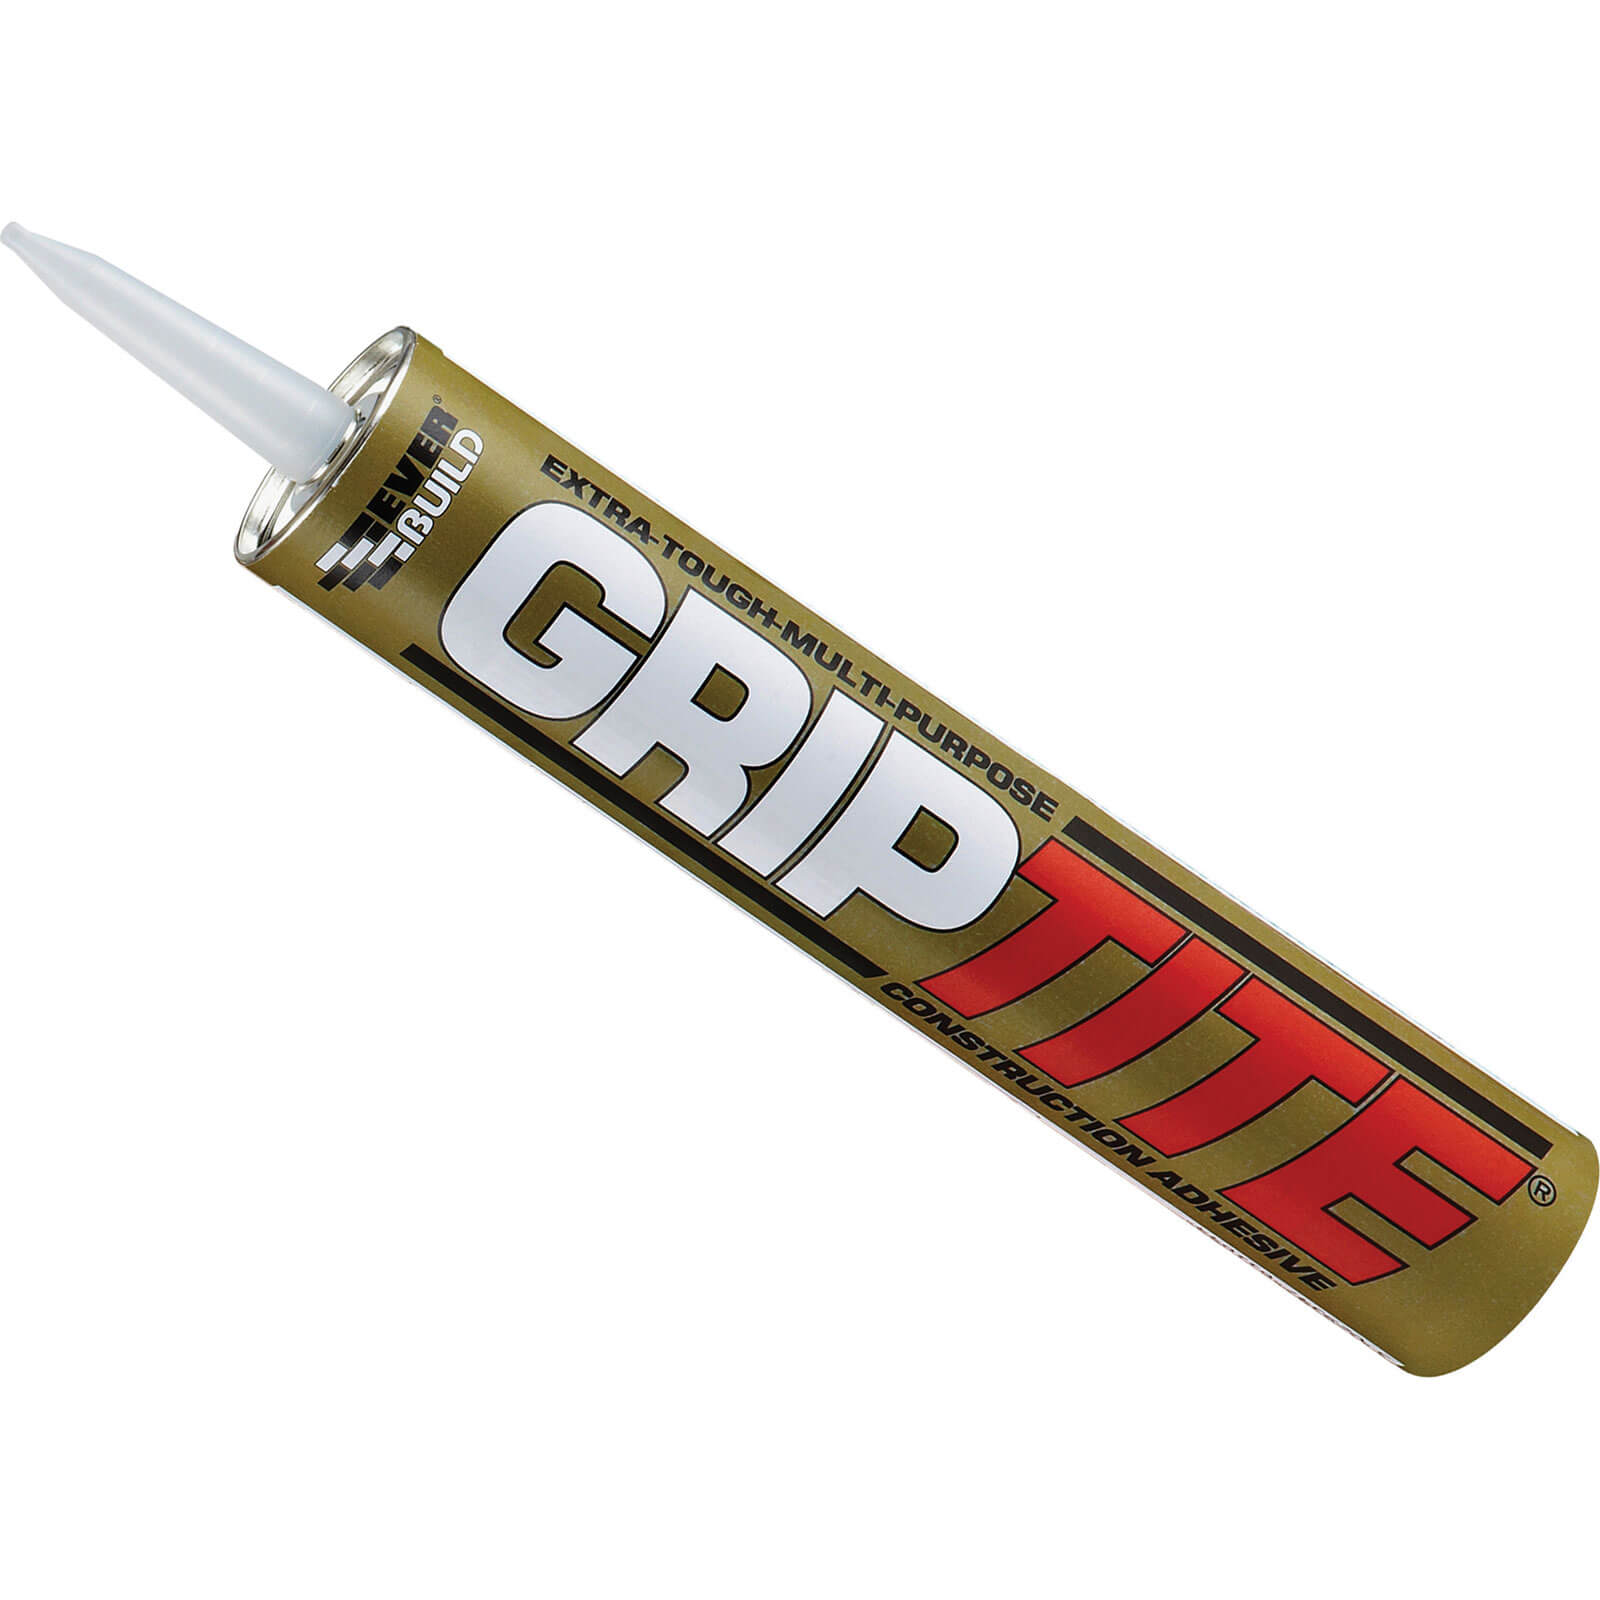 Image of Everbuild Griptite Construction Gap Filler and Adhesive Cartridge 350ml